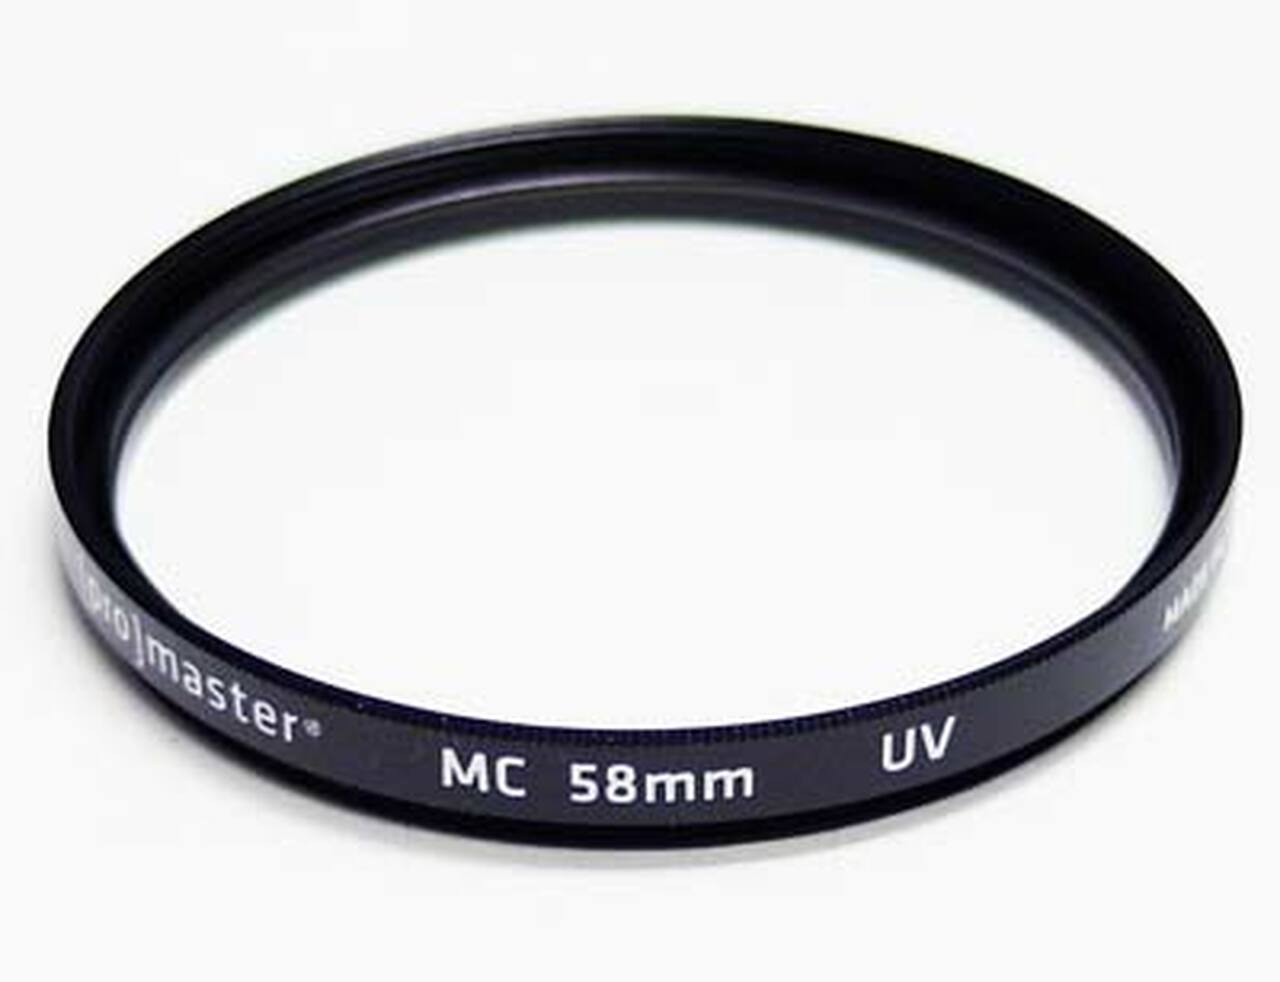 Promaster 3558 77mm Multi-Coated UV Filter